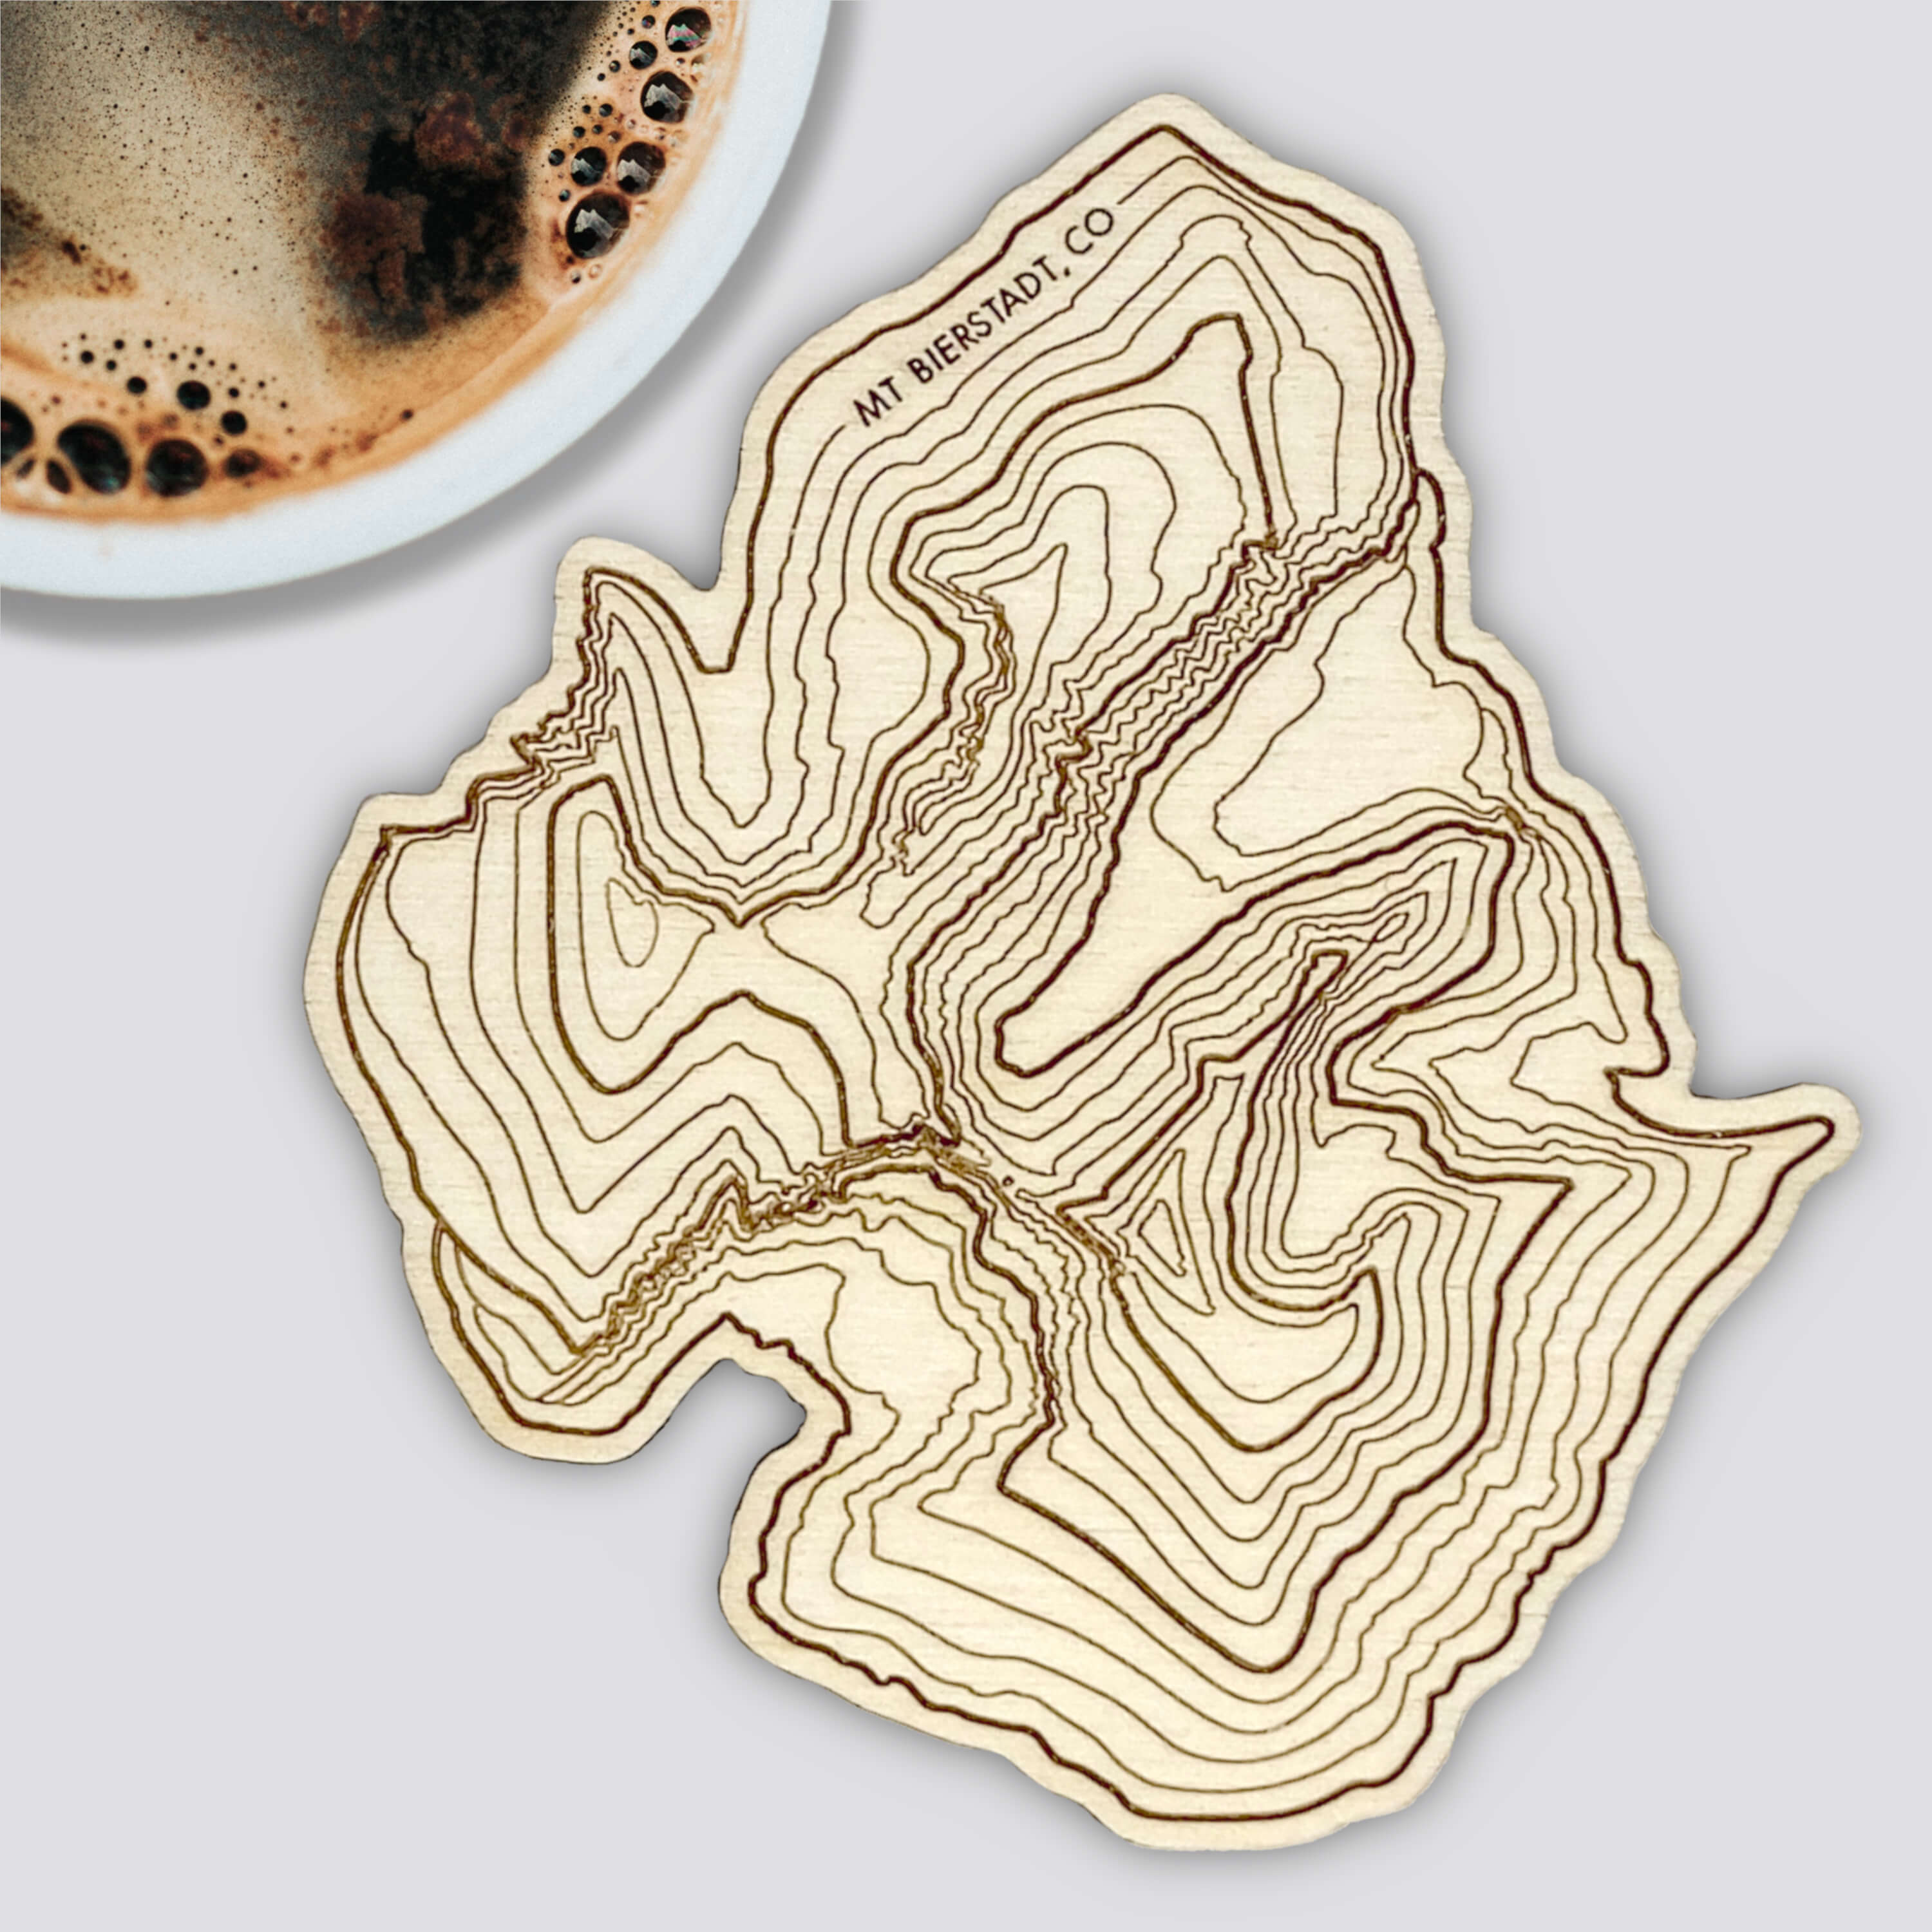 Colorado Mountains Topography Coasters - Set of 4